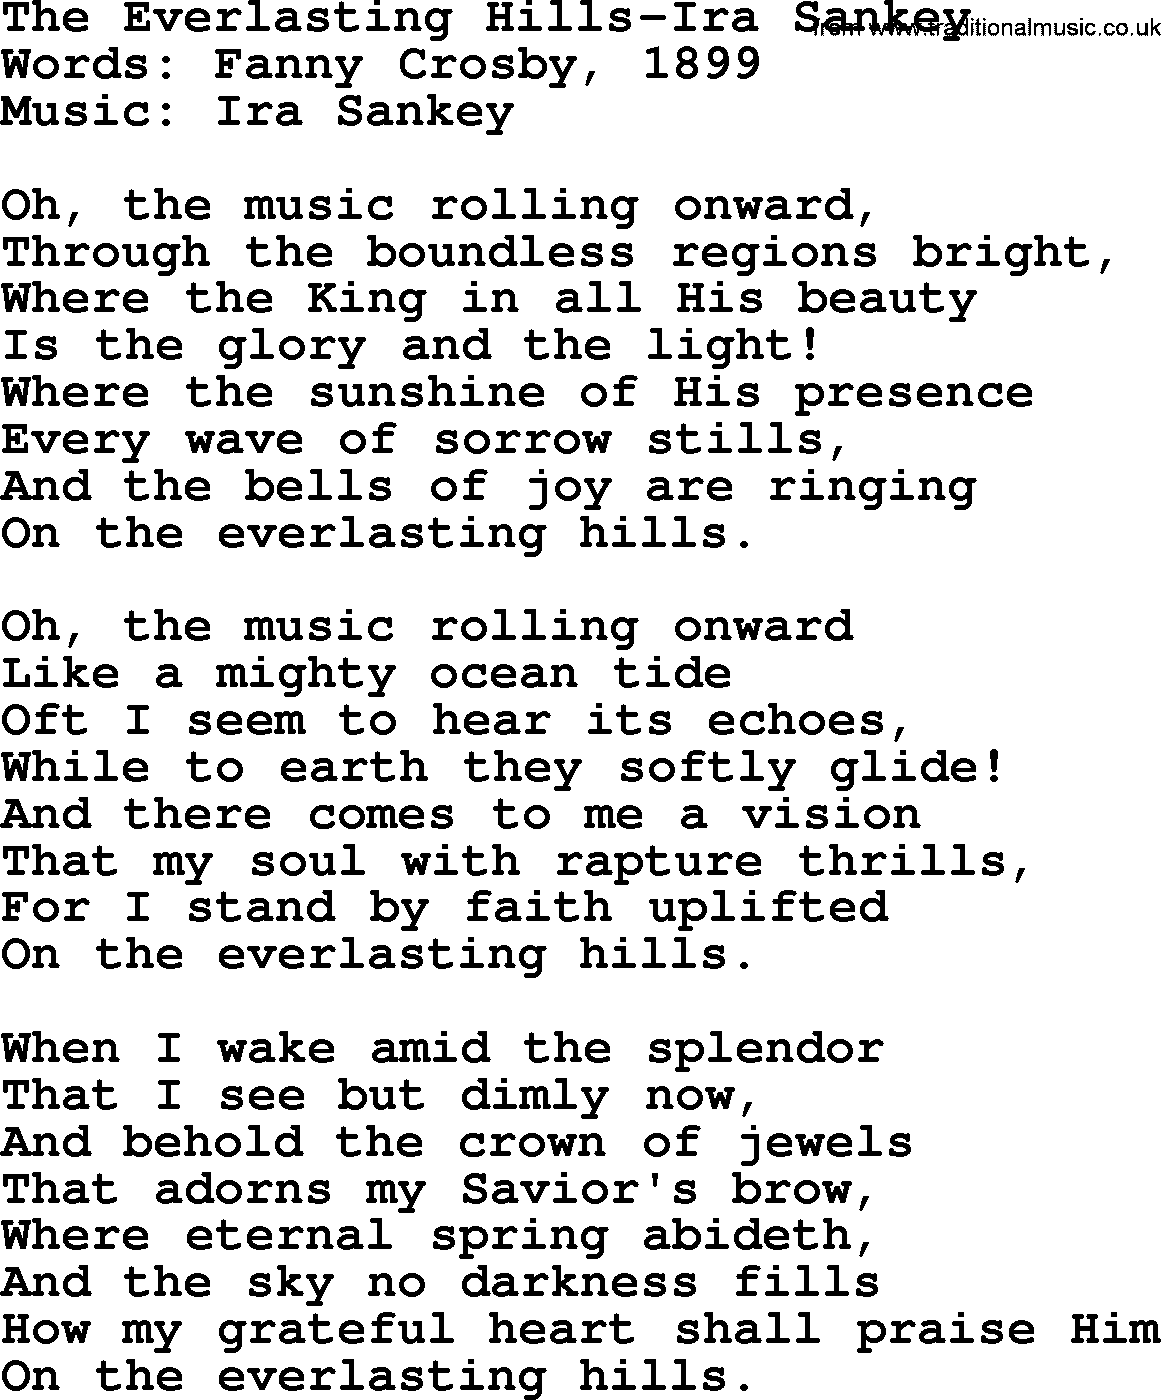 Ira Sankey hymn: The Everlasting Hills-Ira Sankey, lyrics